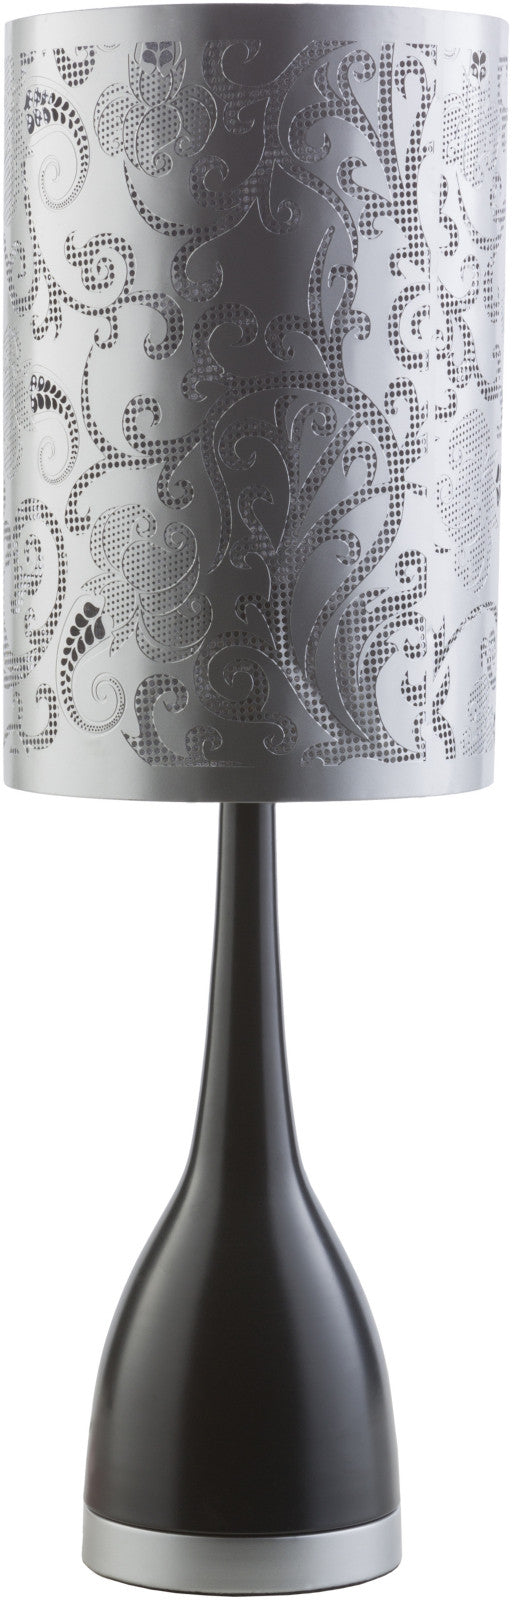 Surya Cordelia CDA-200 Black Lamp Table Lamp